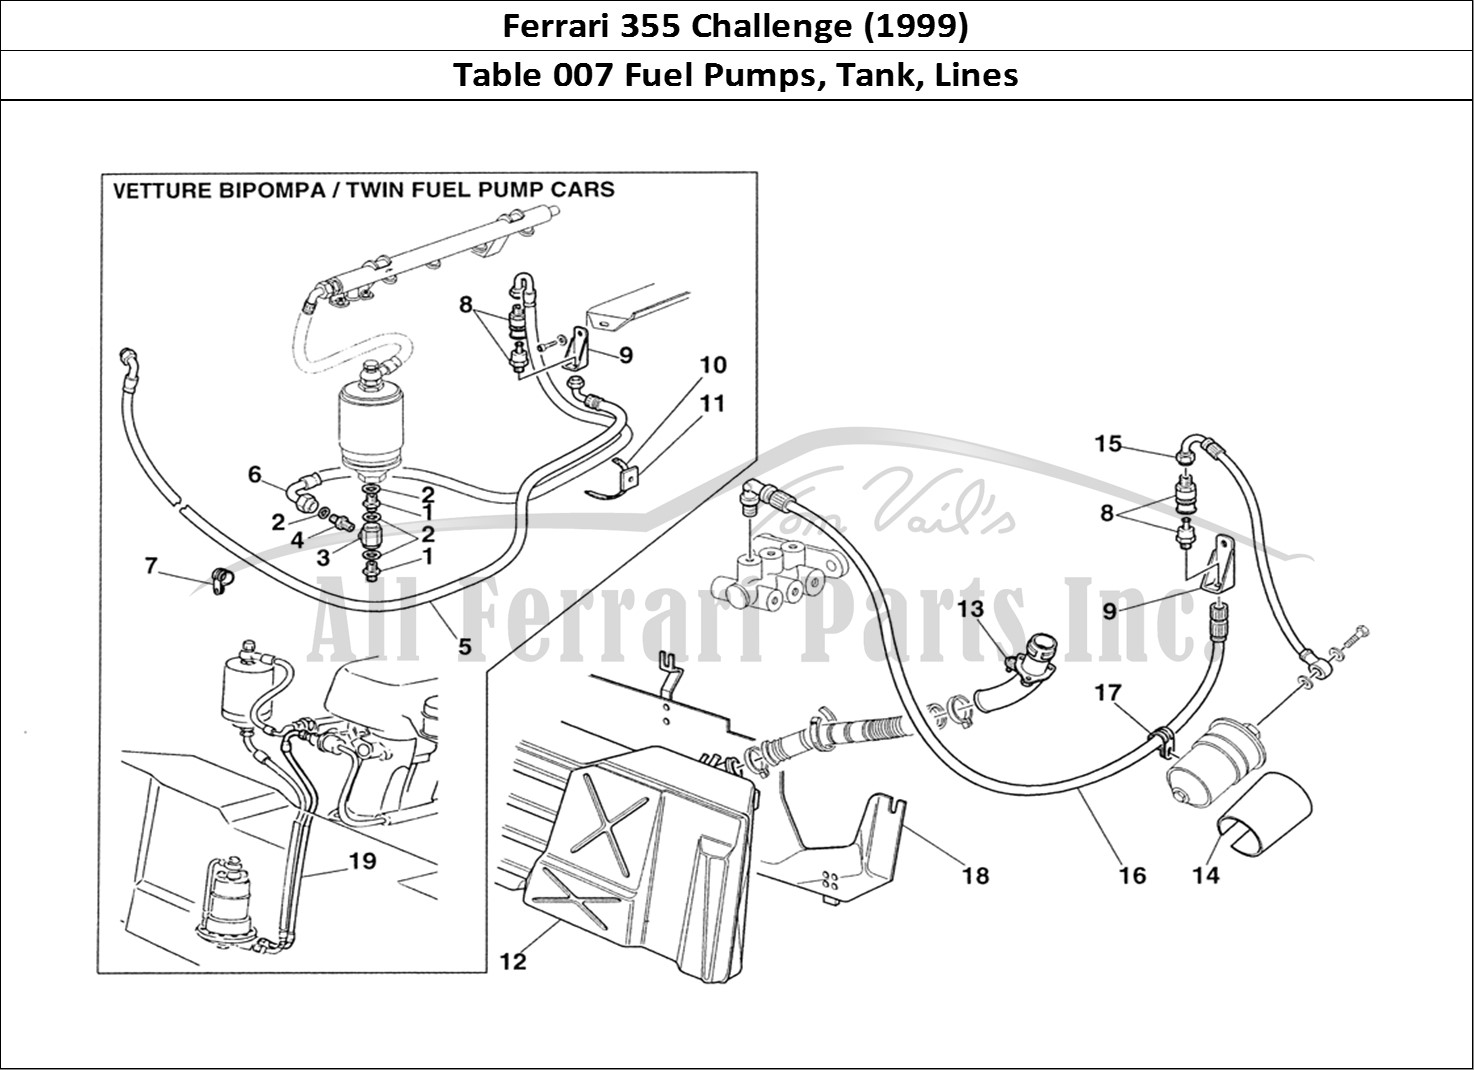 Ferrari Parts Ferrari 355 Challenge (1999) Page 007 Fuel Supply System